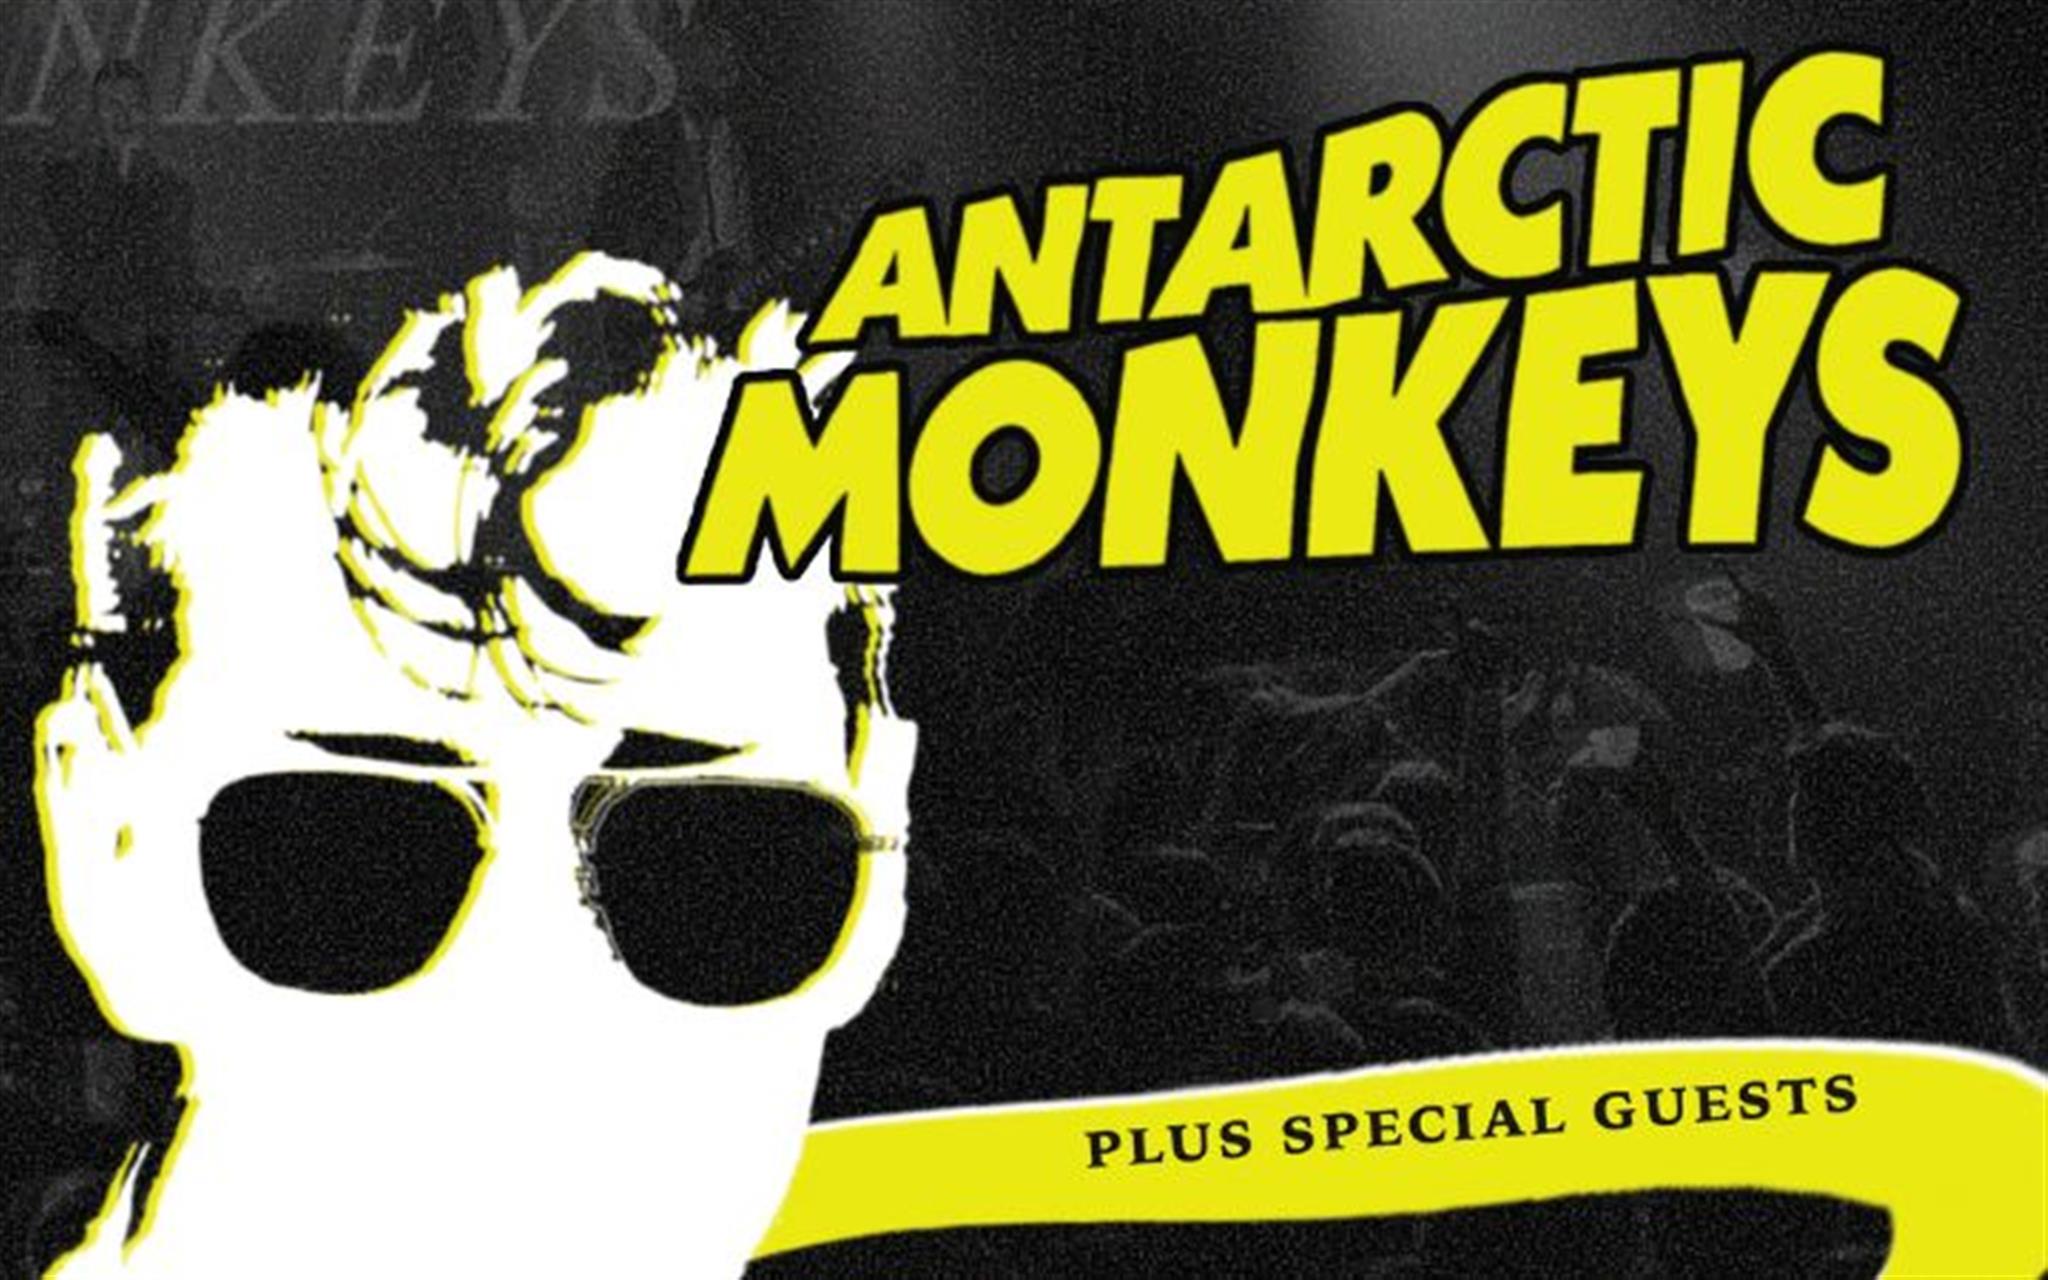 Antarctic Monkeys image